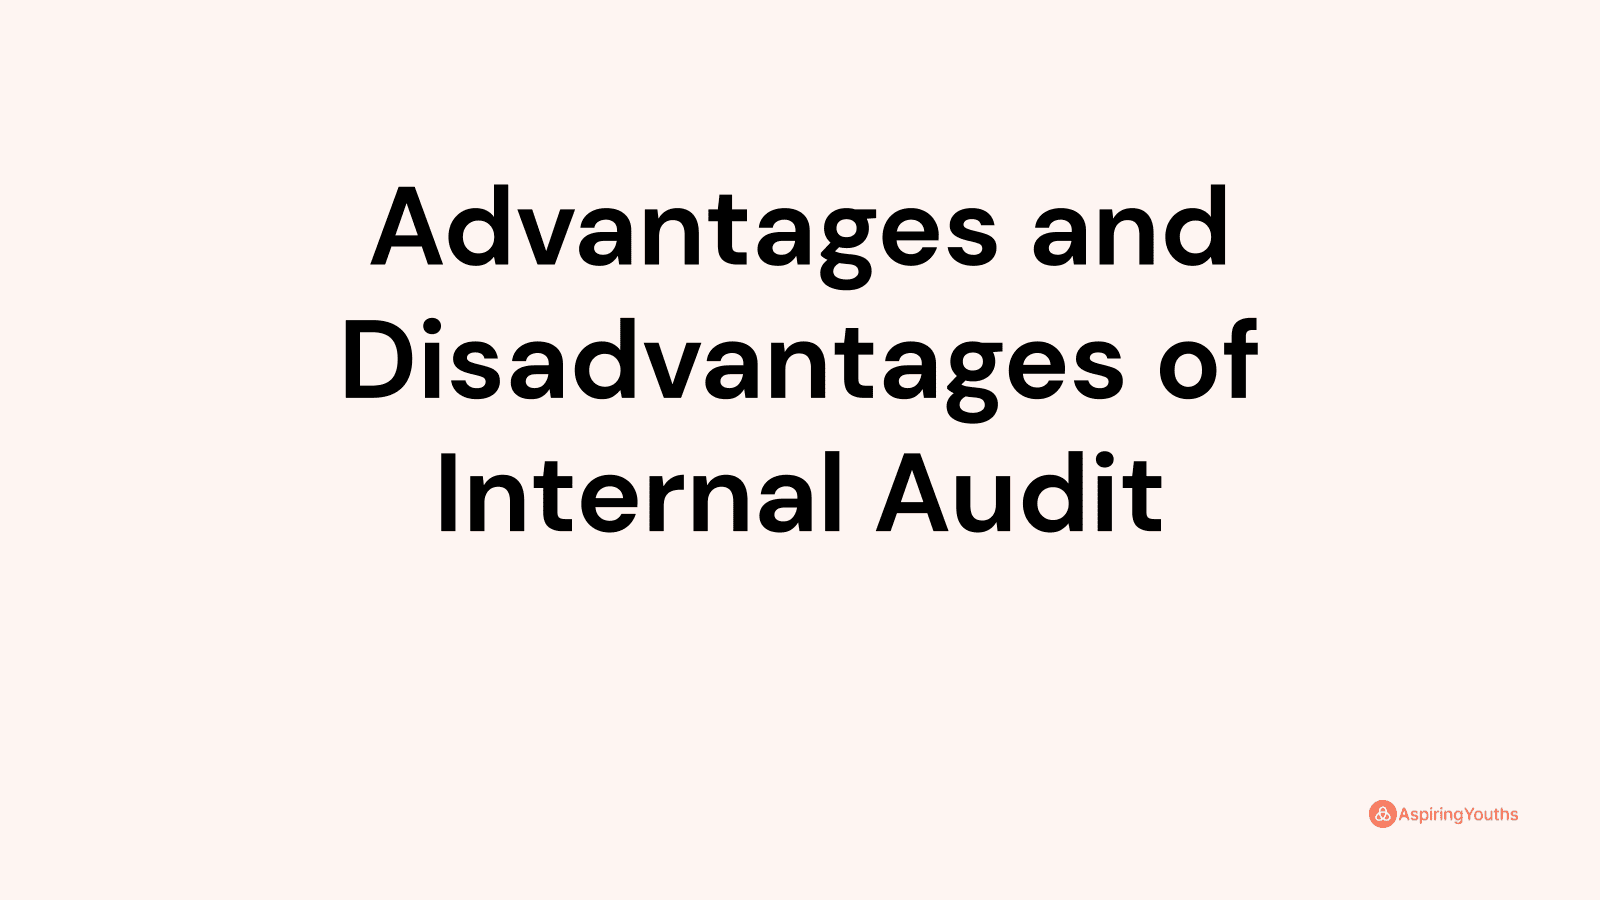 Advantages and disadvantages of Internal Audit